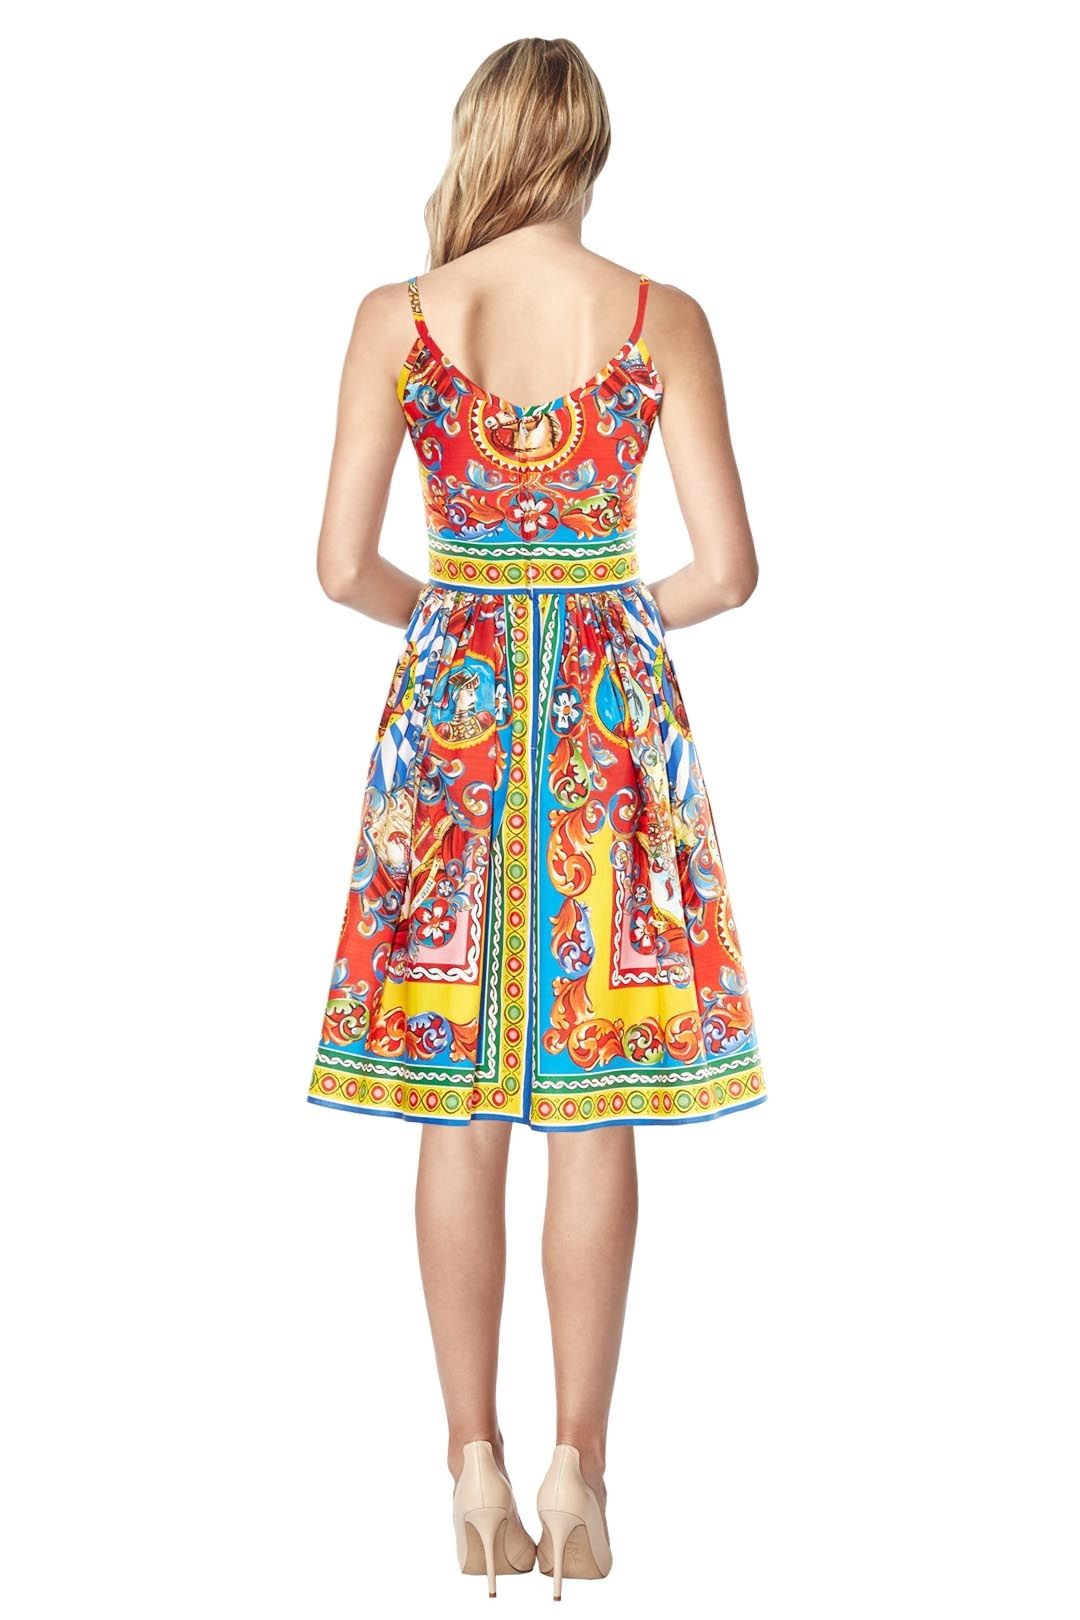 Dolce & Gabbana - Carretto Print Sleeveless Dress - Prints - Back